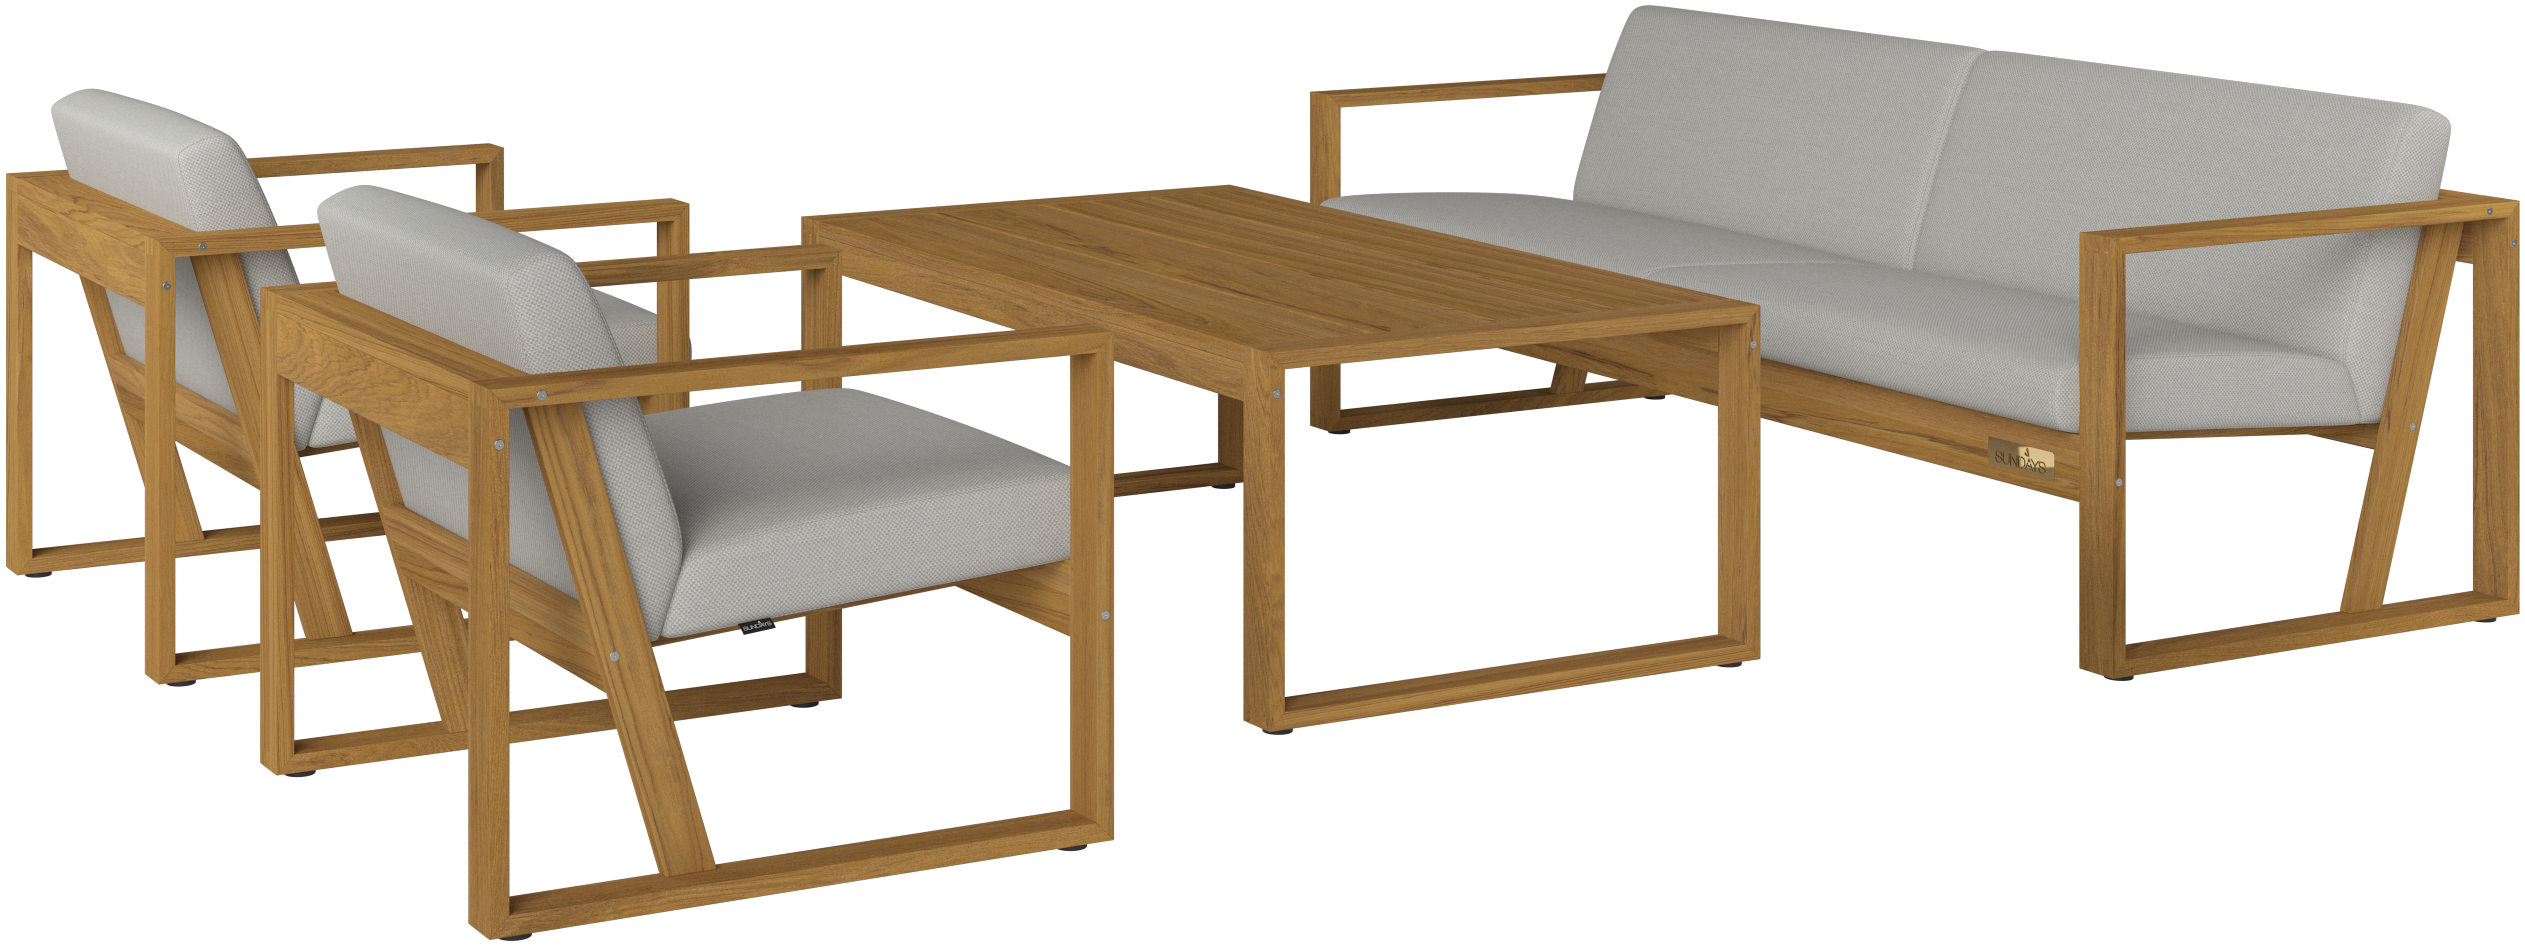 Core hagsofagruppe med stoler og bord fra Sundays Design utemøbler - får du hos Fine Design Hagemøbler